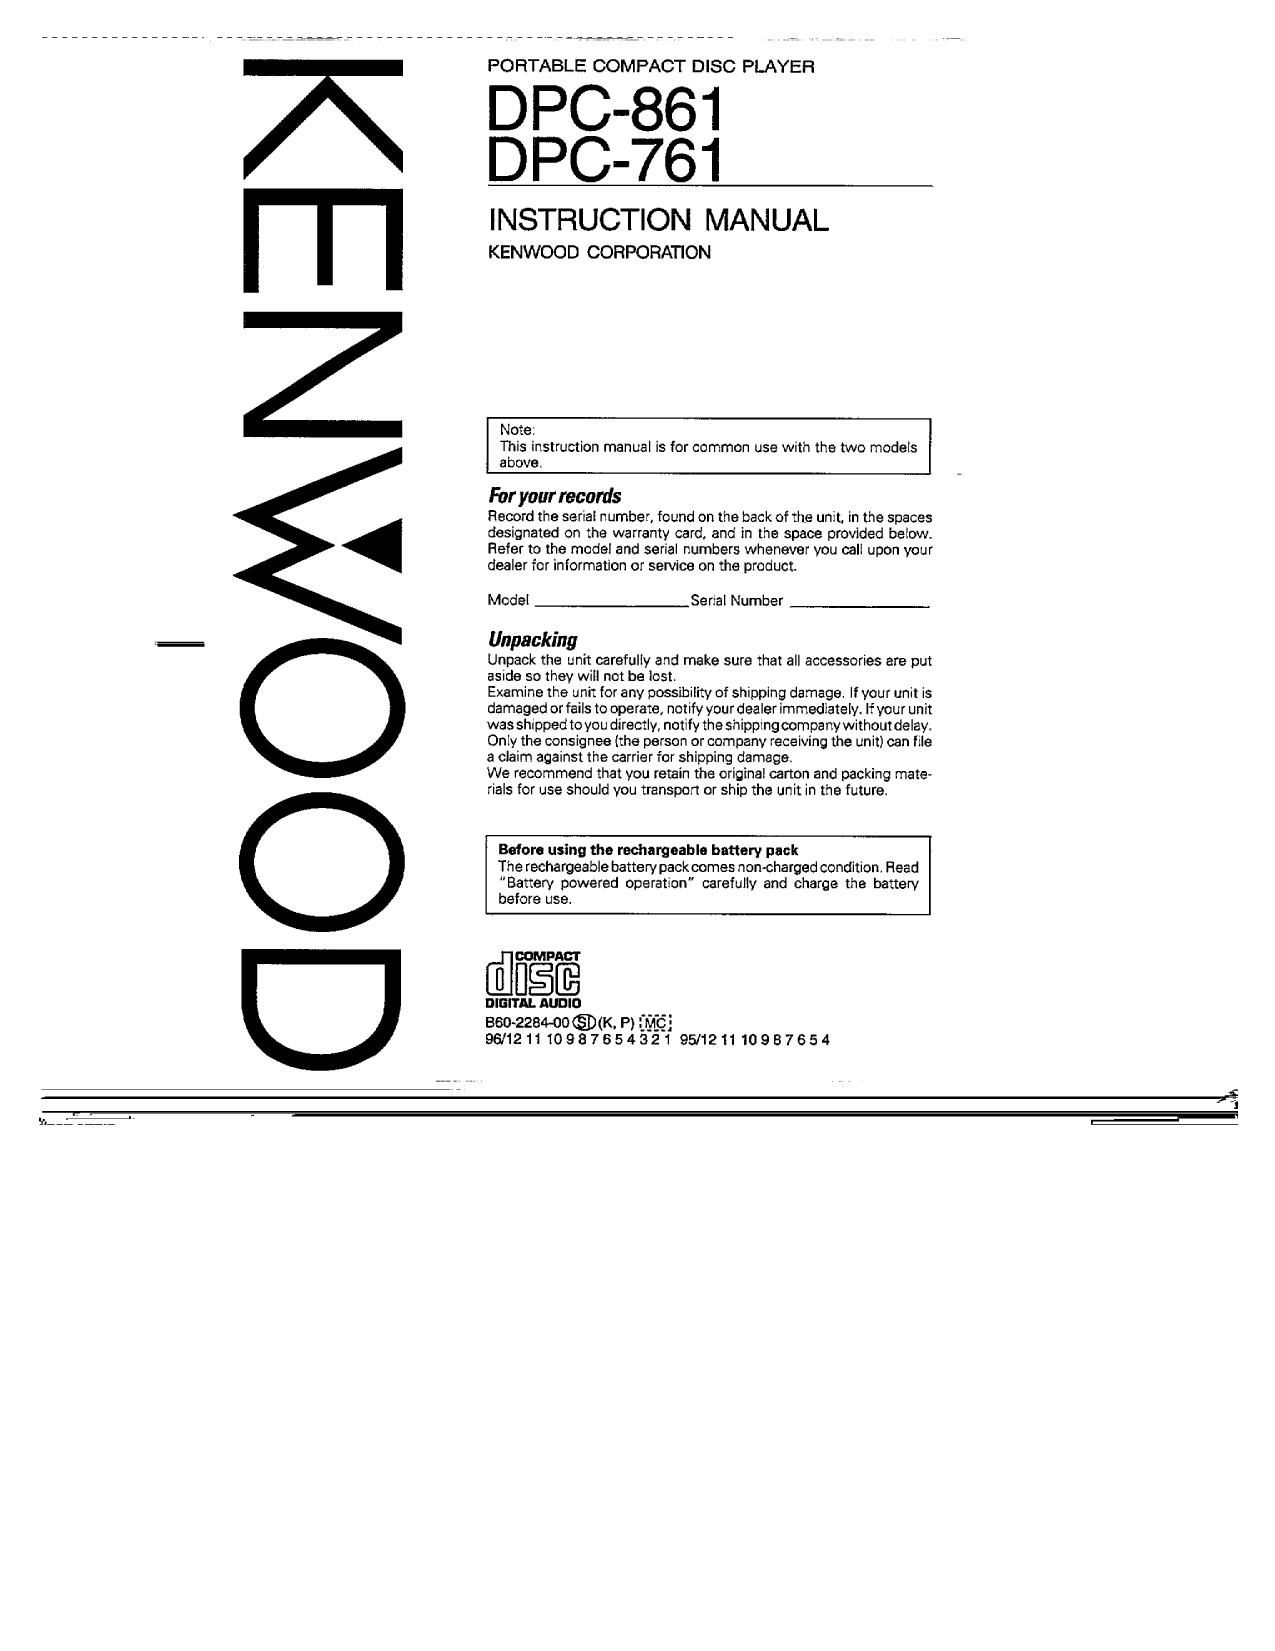 Kenwood DPC 761 Owners Manual